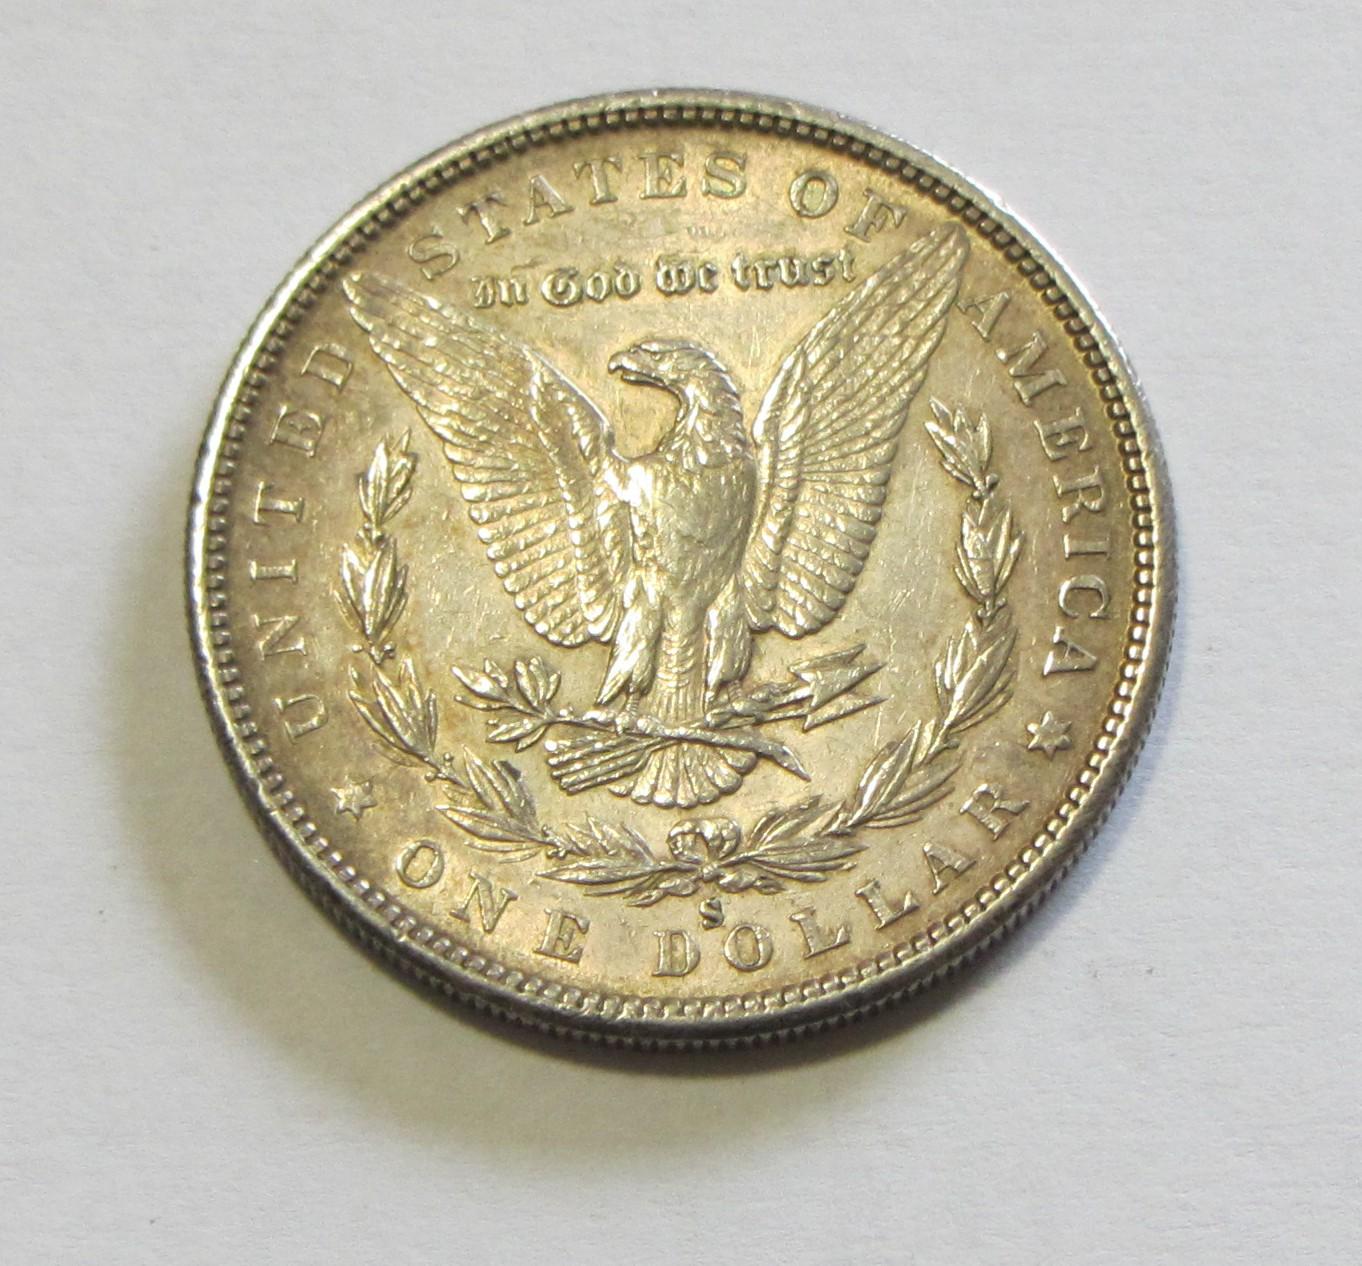 $1 1880-S MORGAN